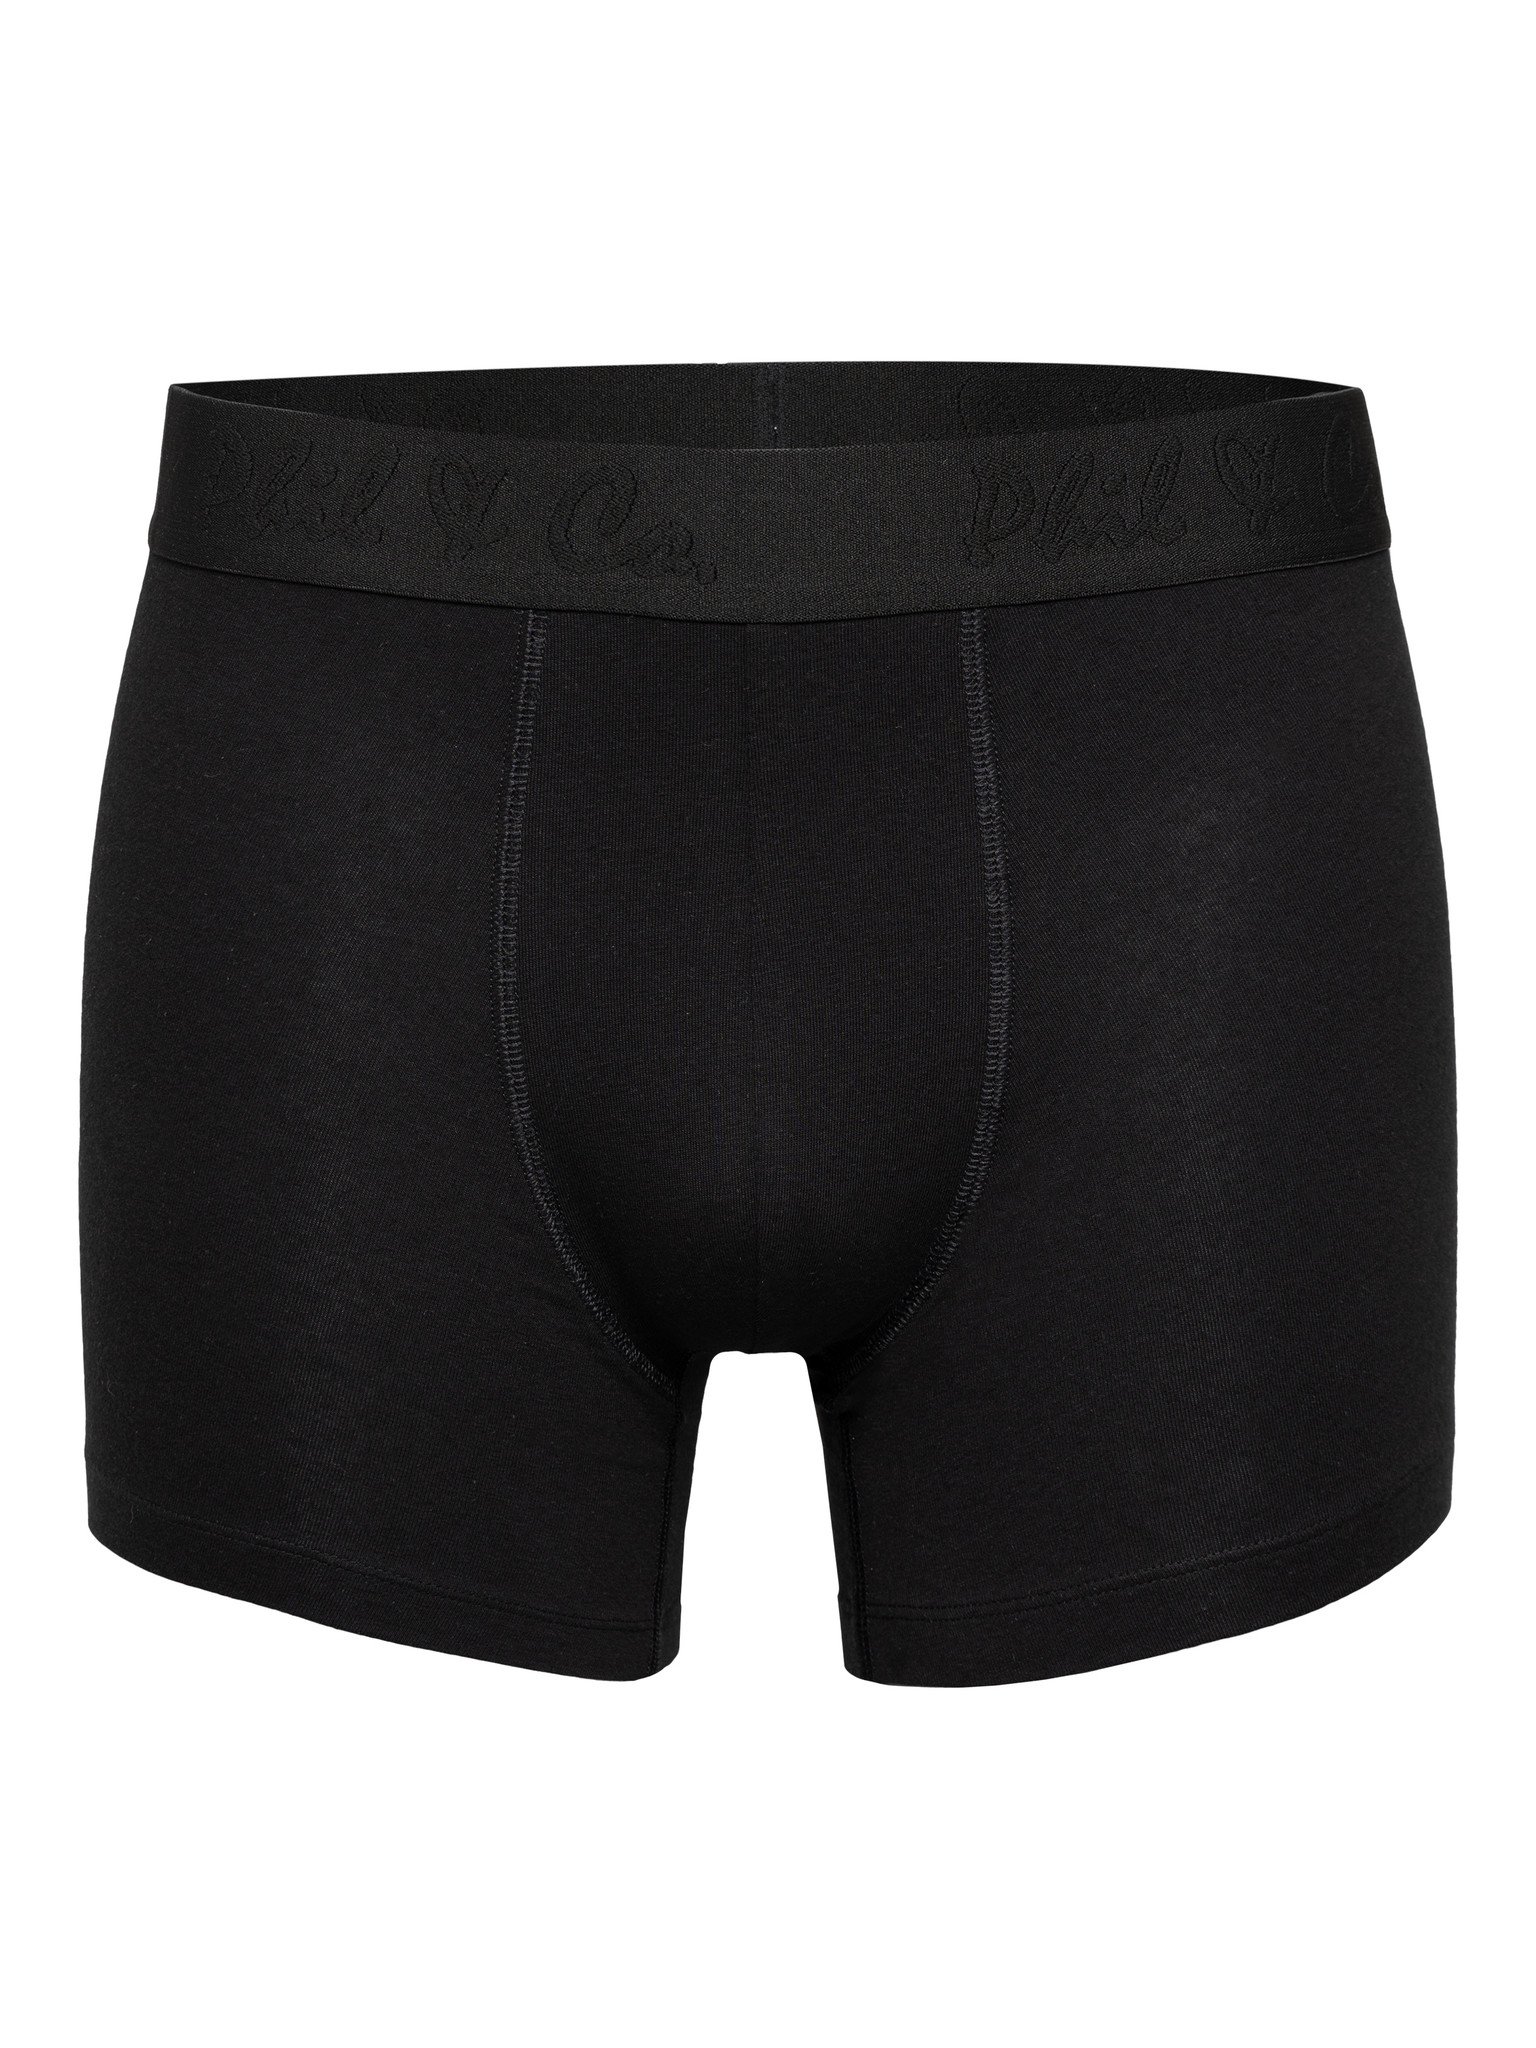 Phil & Co Boxer Shorts Men Multipack 8-Pack Solid Black | Underwear ...